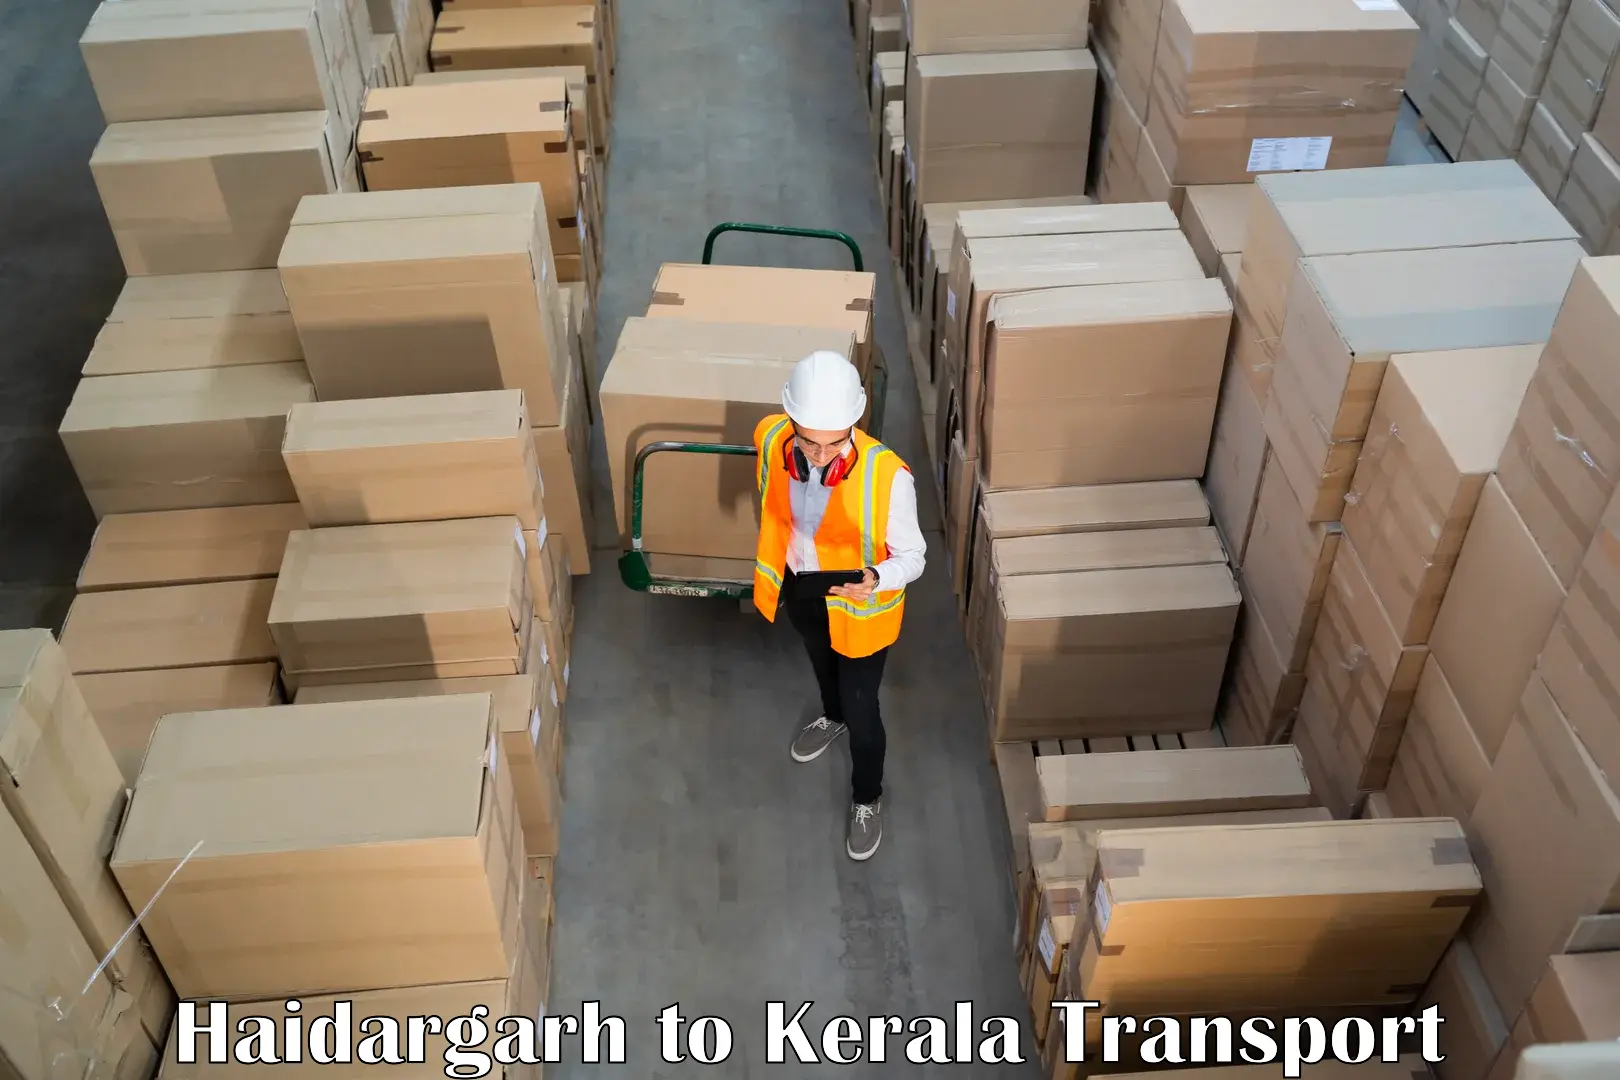 Container transport service in Haidargarh to Changanacherry